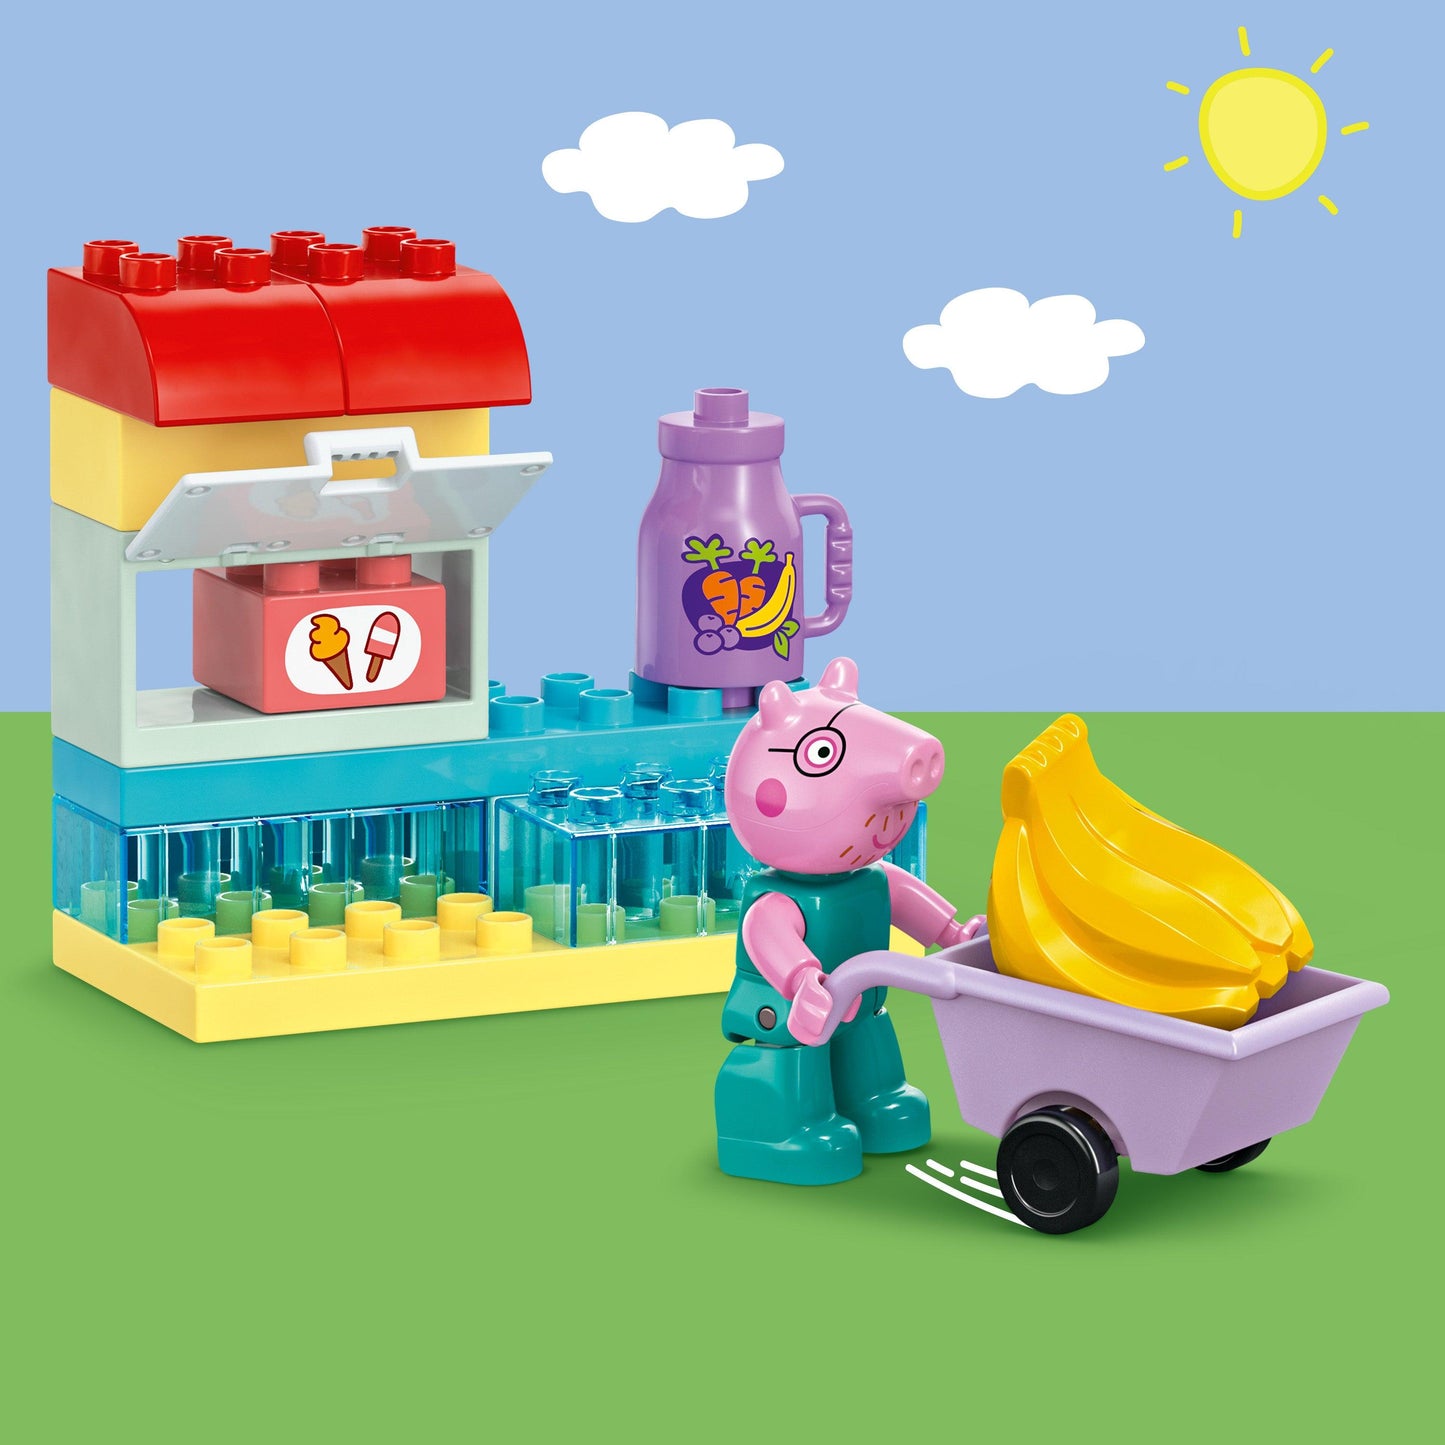 LEGO Peppa Big supermarkt 10434 DUPLO (Pre-Order: verwacht juni) PEPPA PIG @ 2TTOYS LEGO €. 59.49